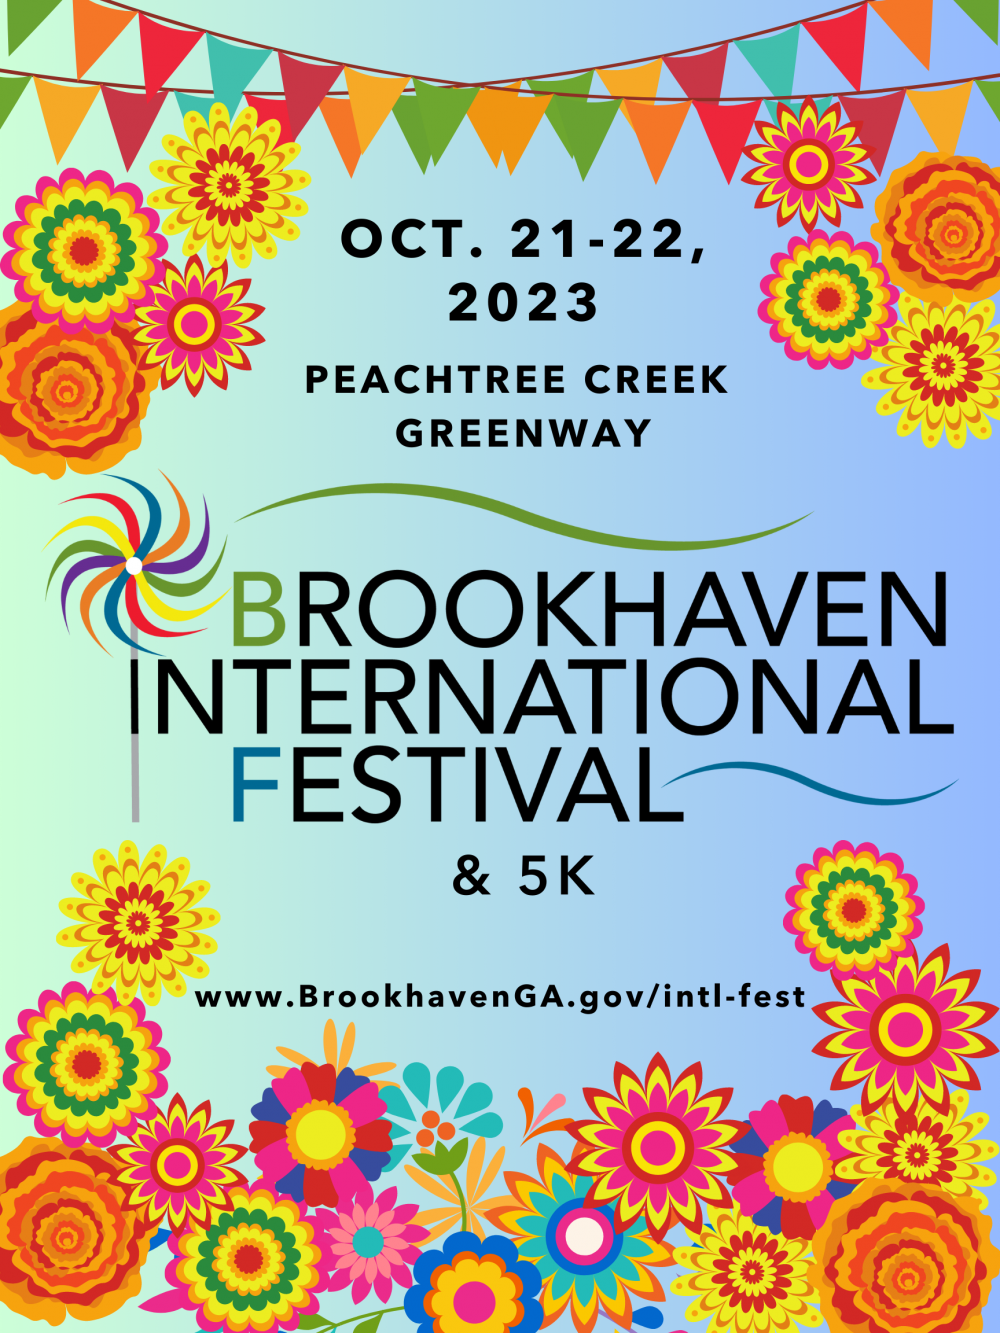 District 4 inaugural Brookhaven International Festival